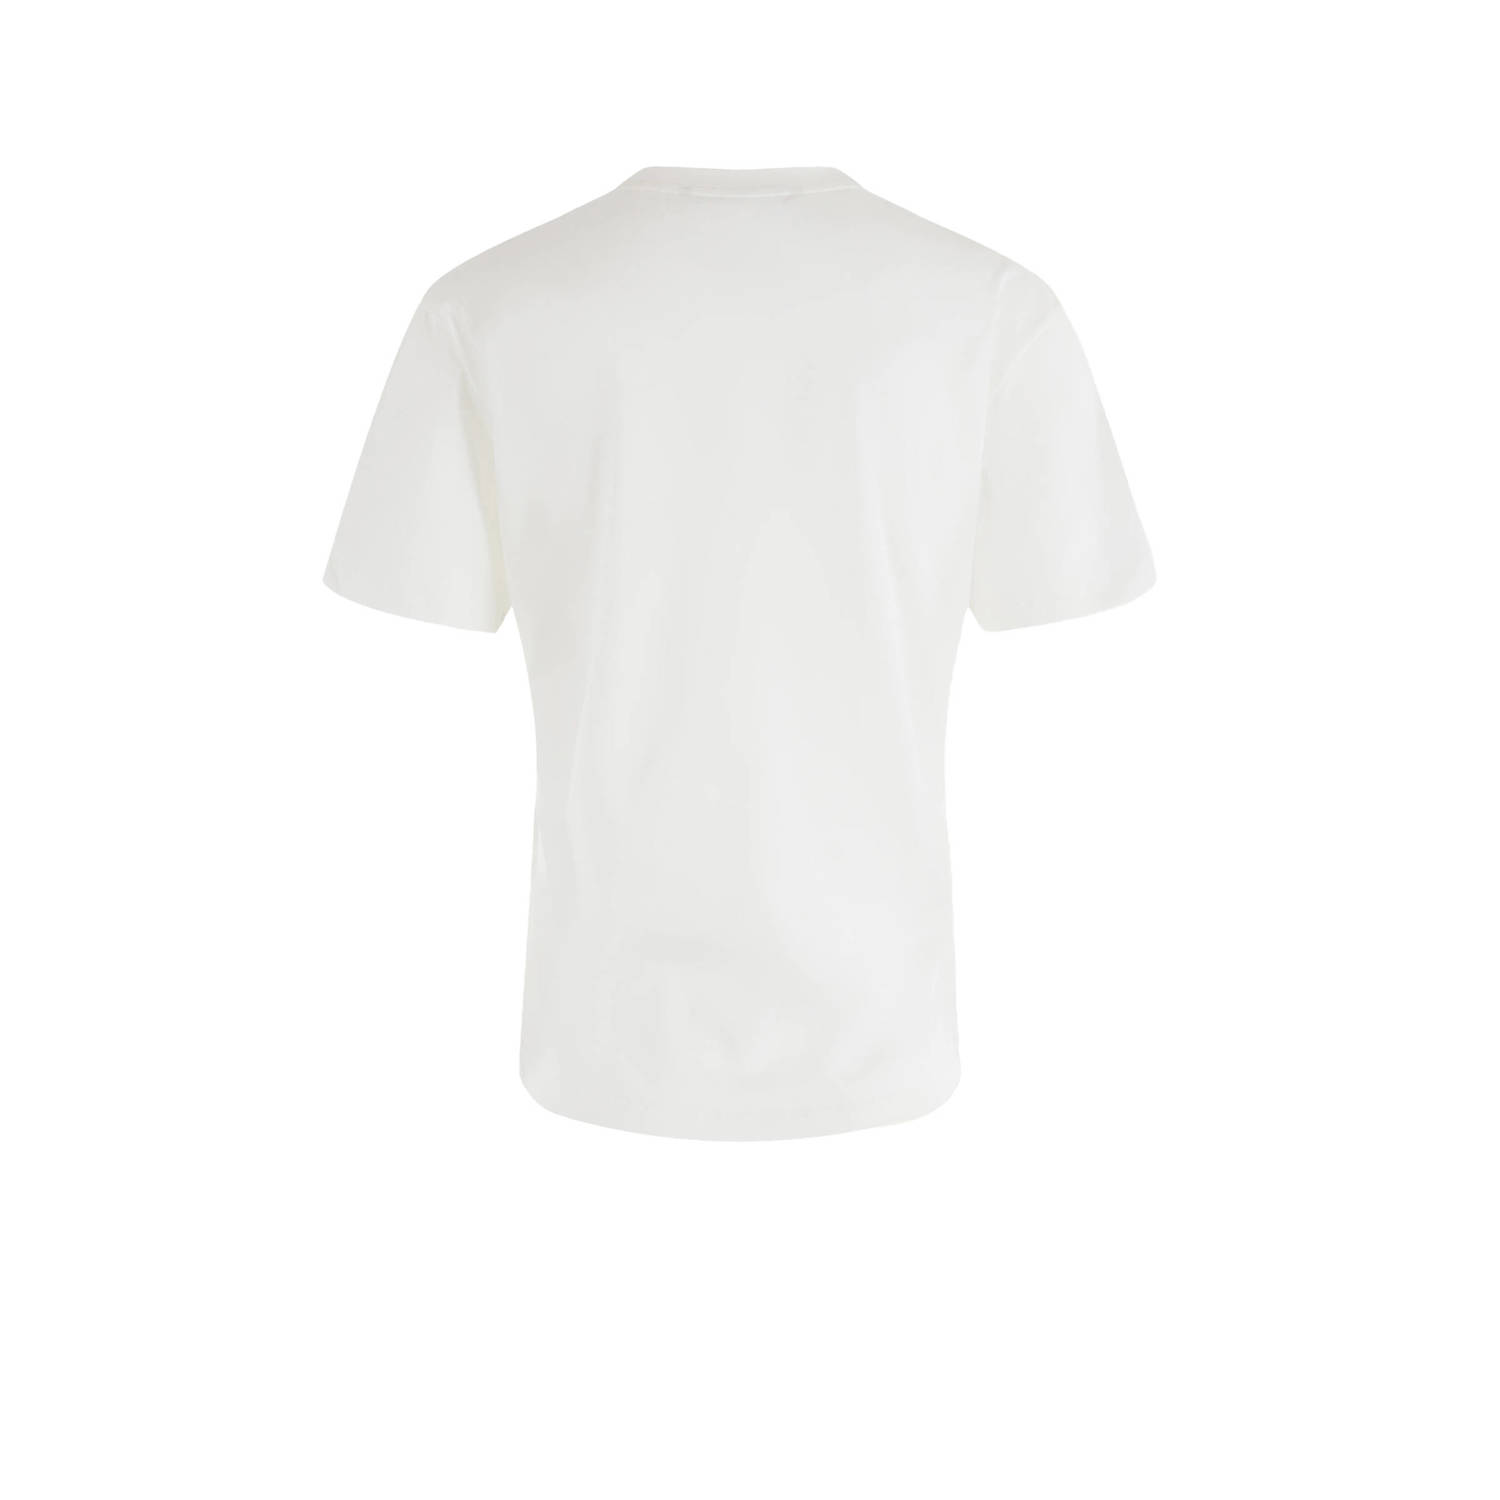 Moscow T-shirt met printopdruk wit